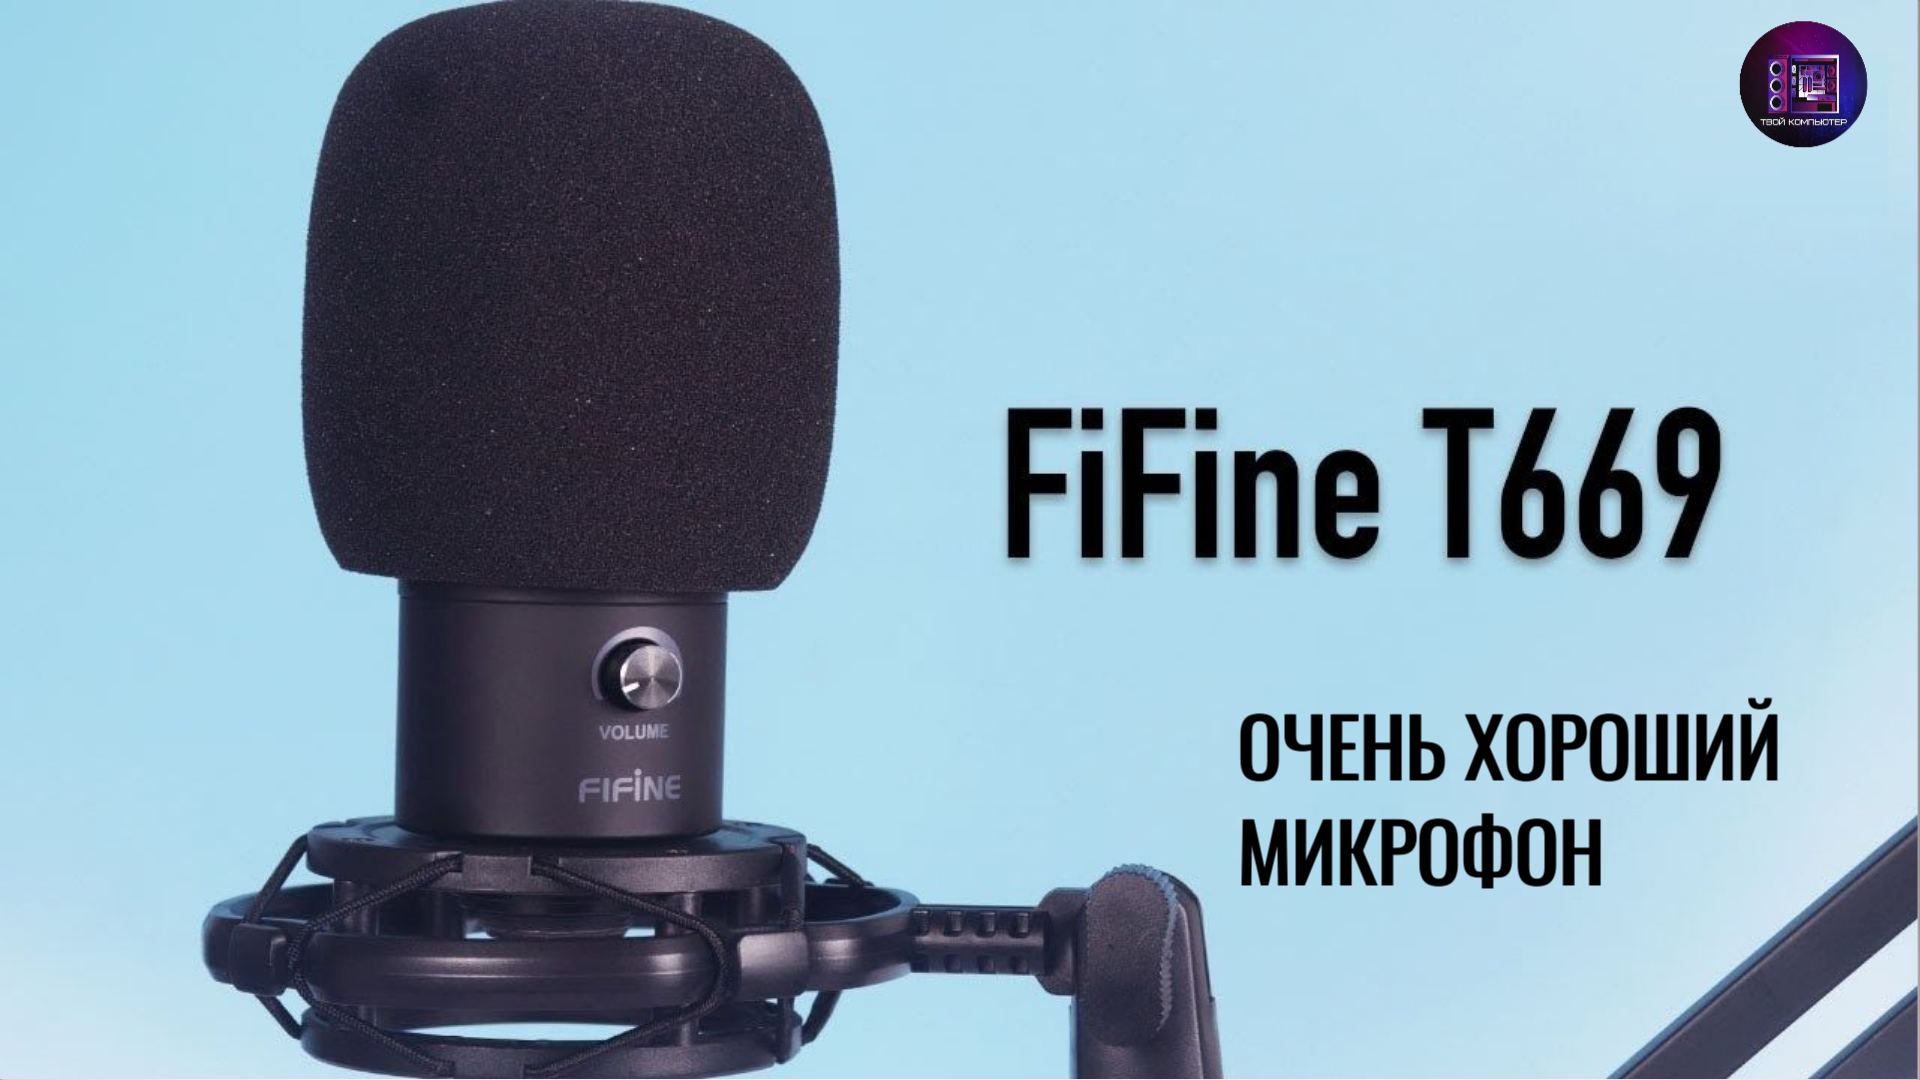 Микрофон Fifine t669. Fifine t669 черный. Микрофон студийный Fifine t669. Микрофон Fifine t669 комплект. Микро fifine